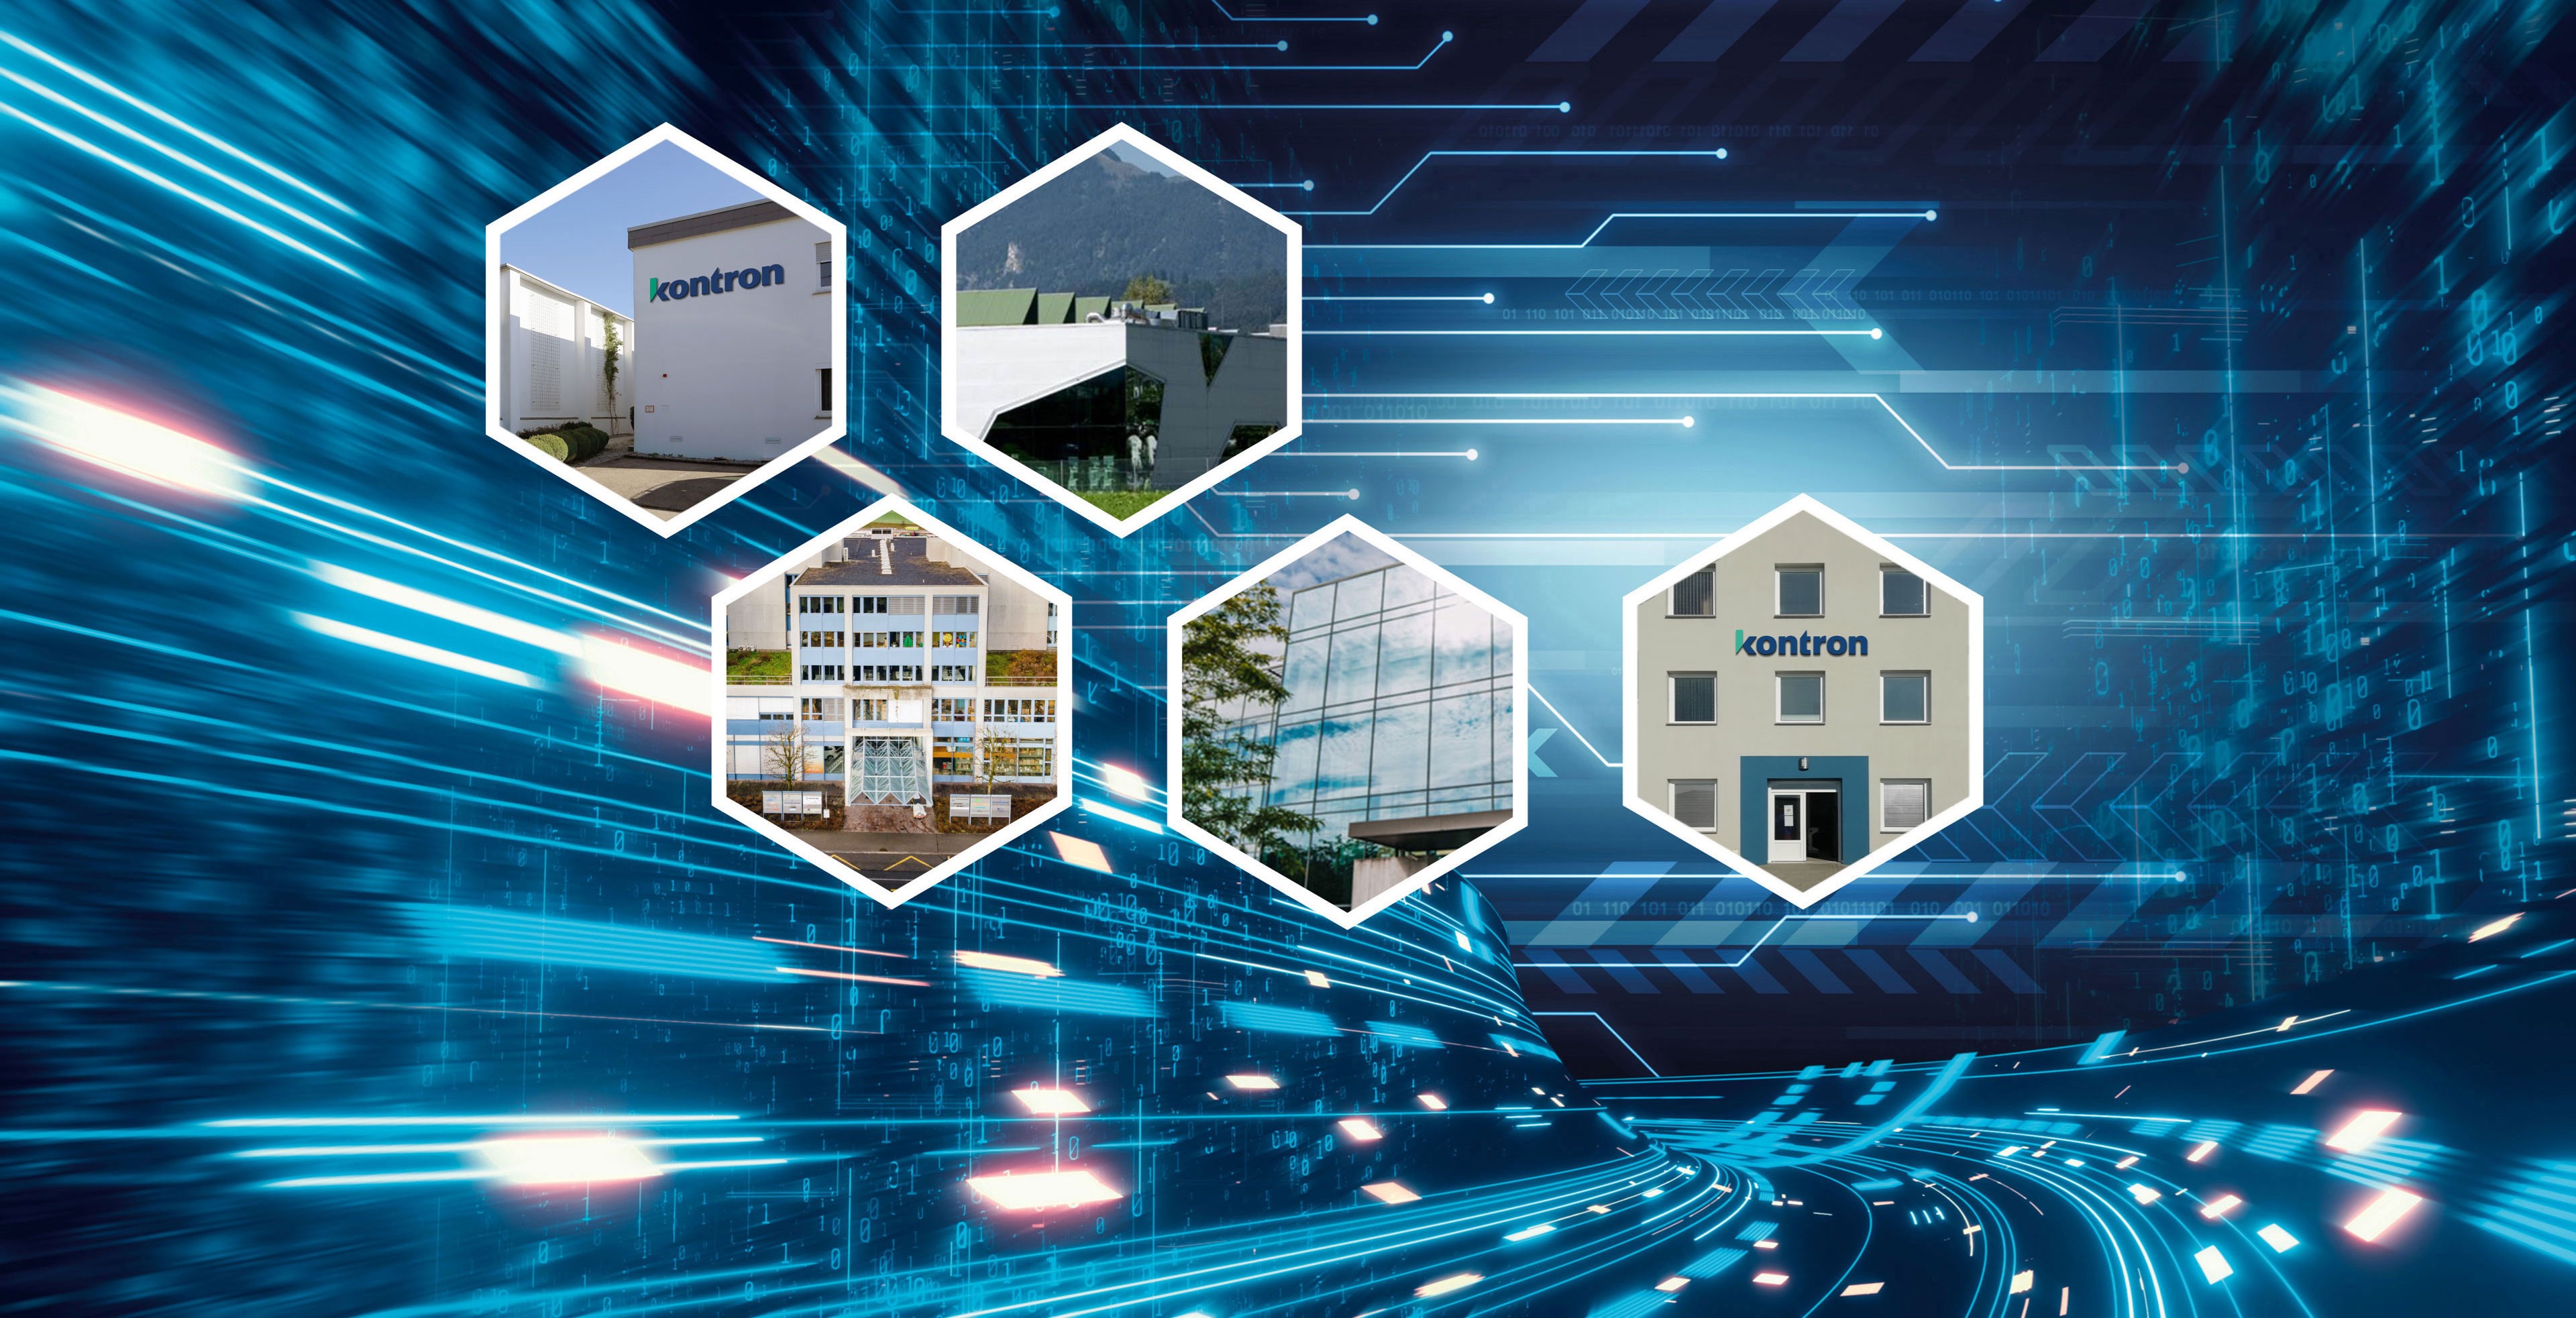 Company building Kontron Electronics Germany, Switzerland, Hungary, Kontron Austria and Iskratel EMS